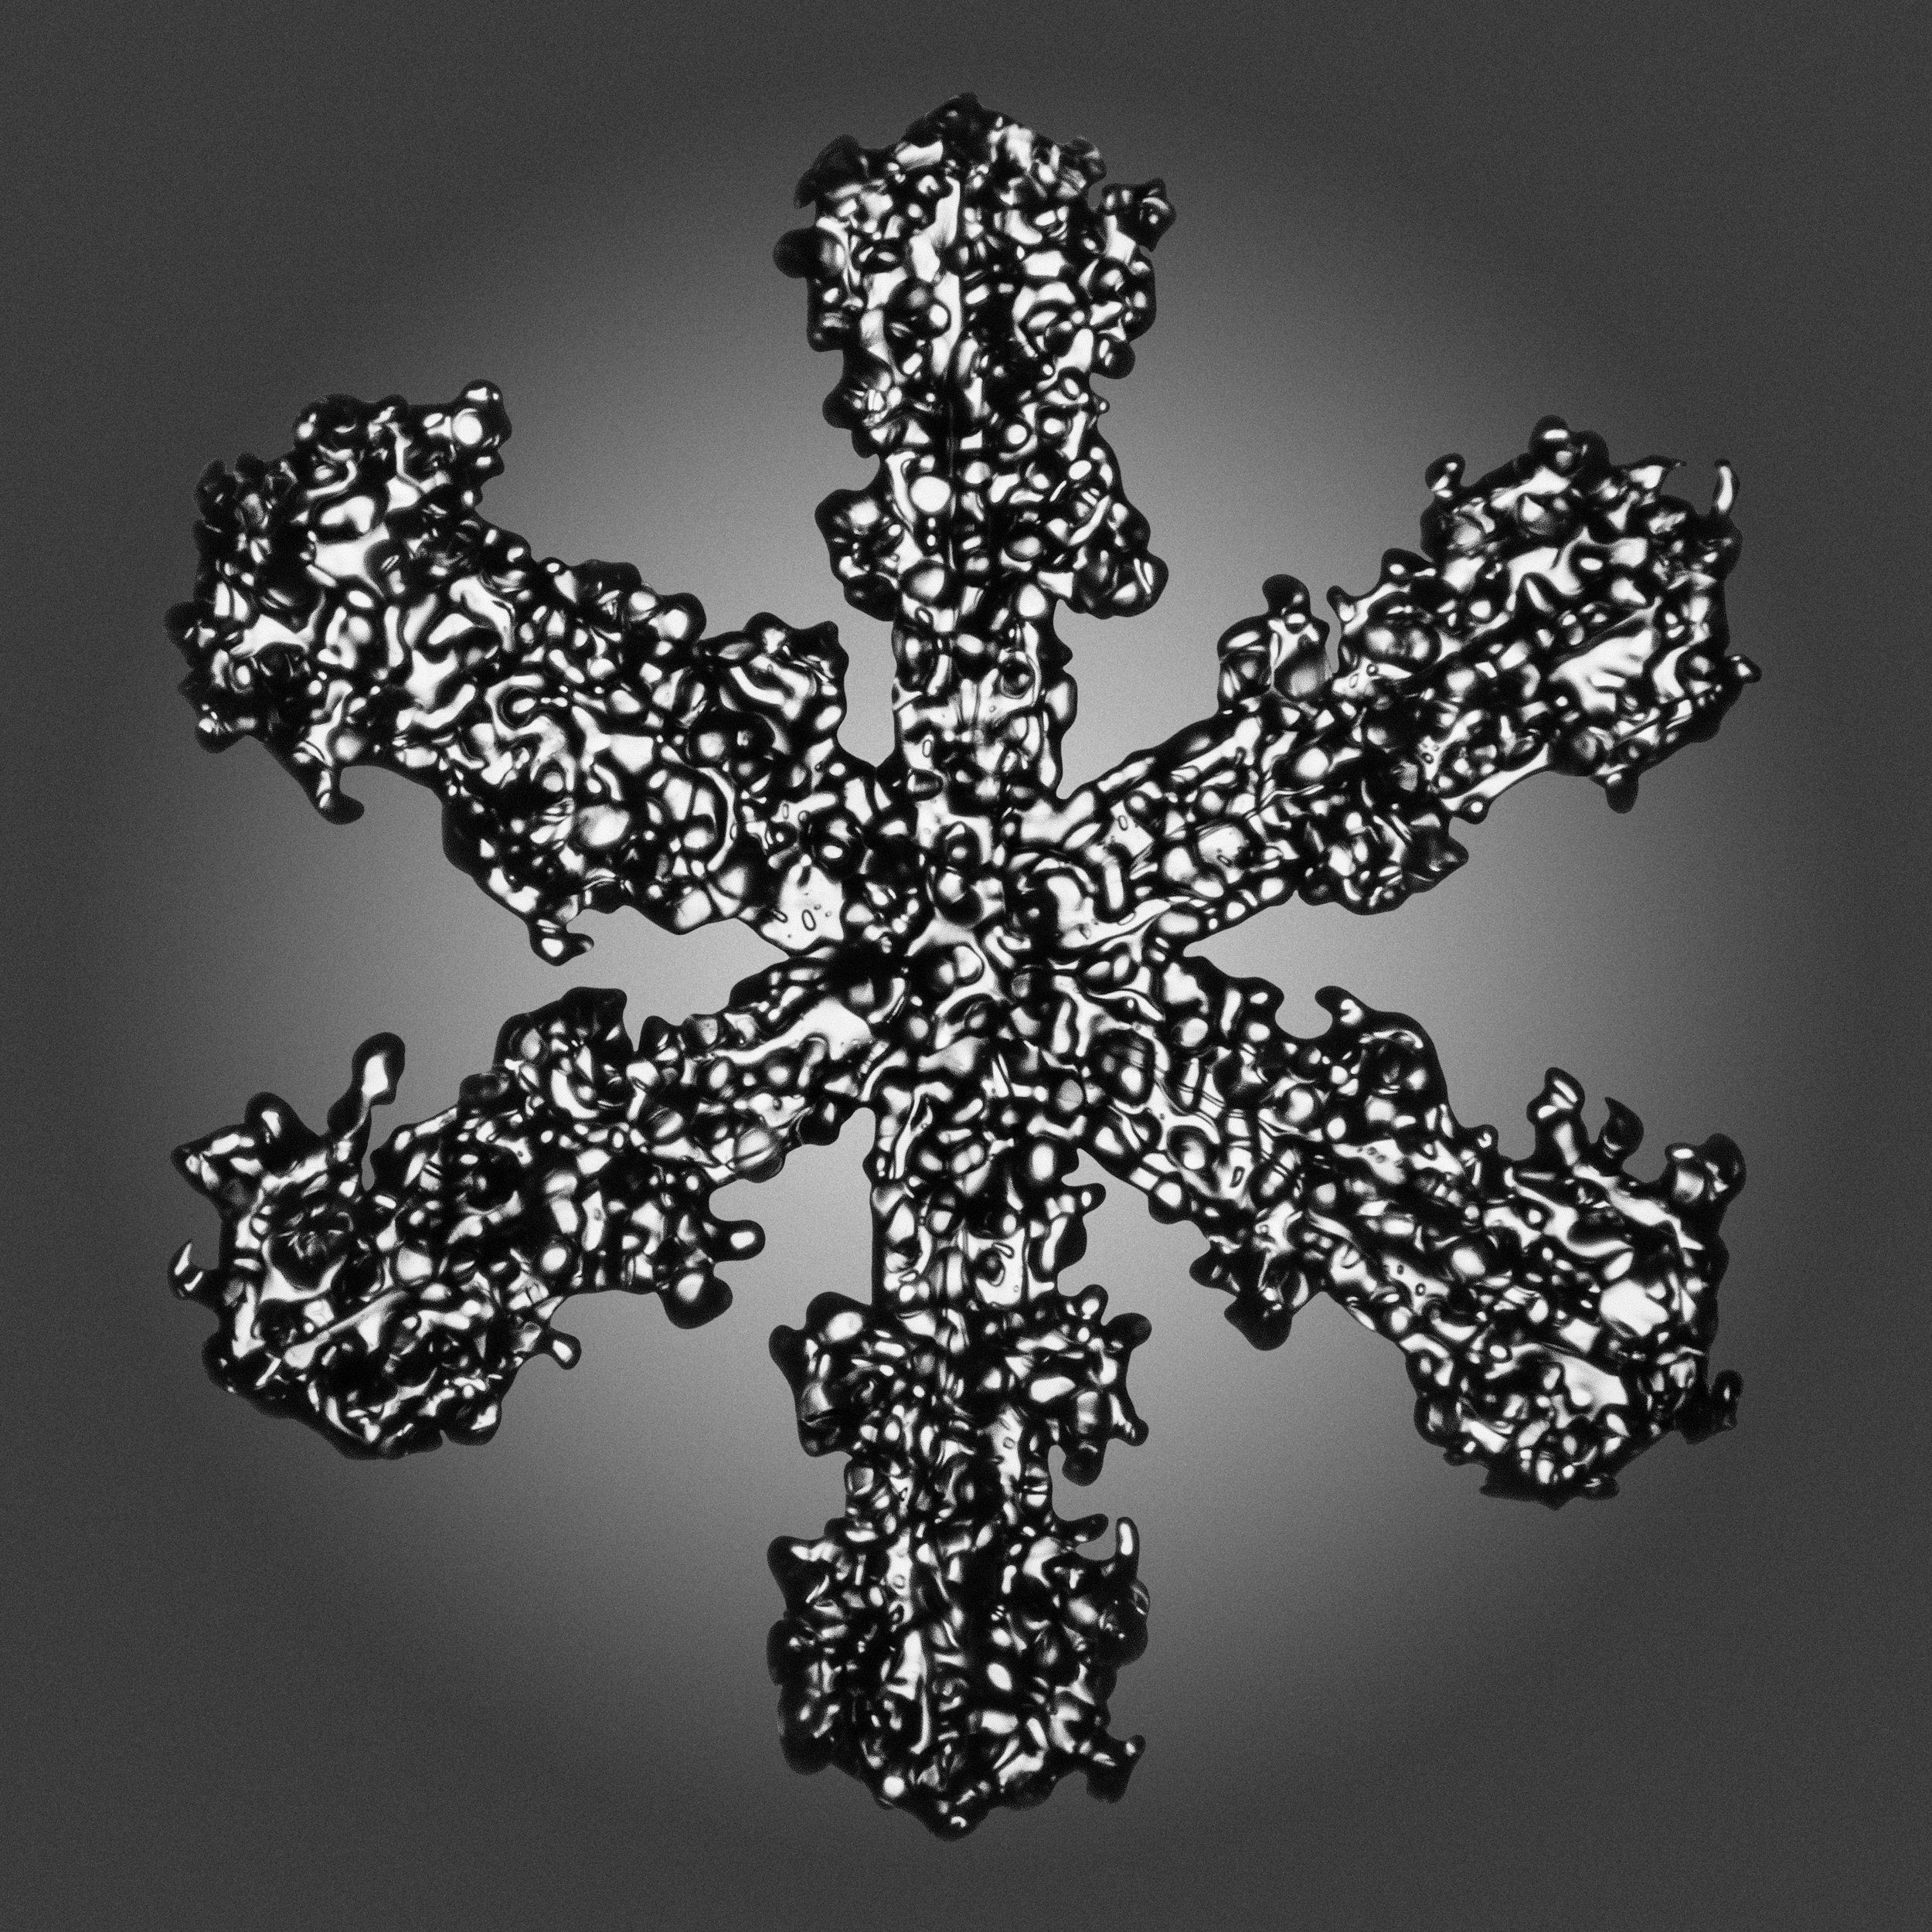 06_Snowflakes_40x40.jpg